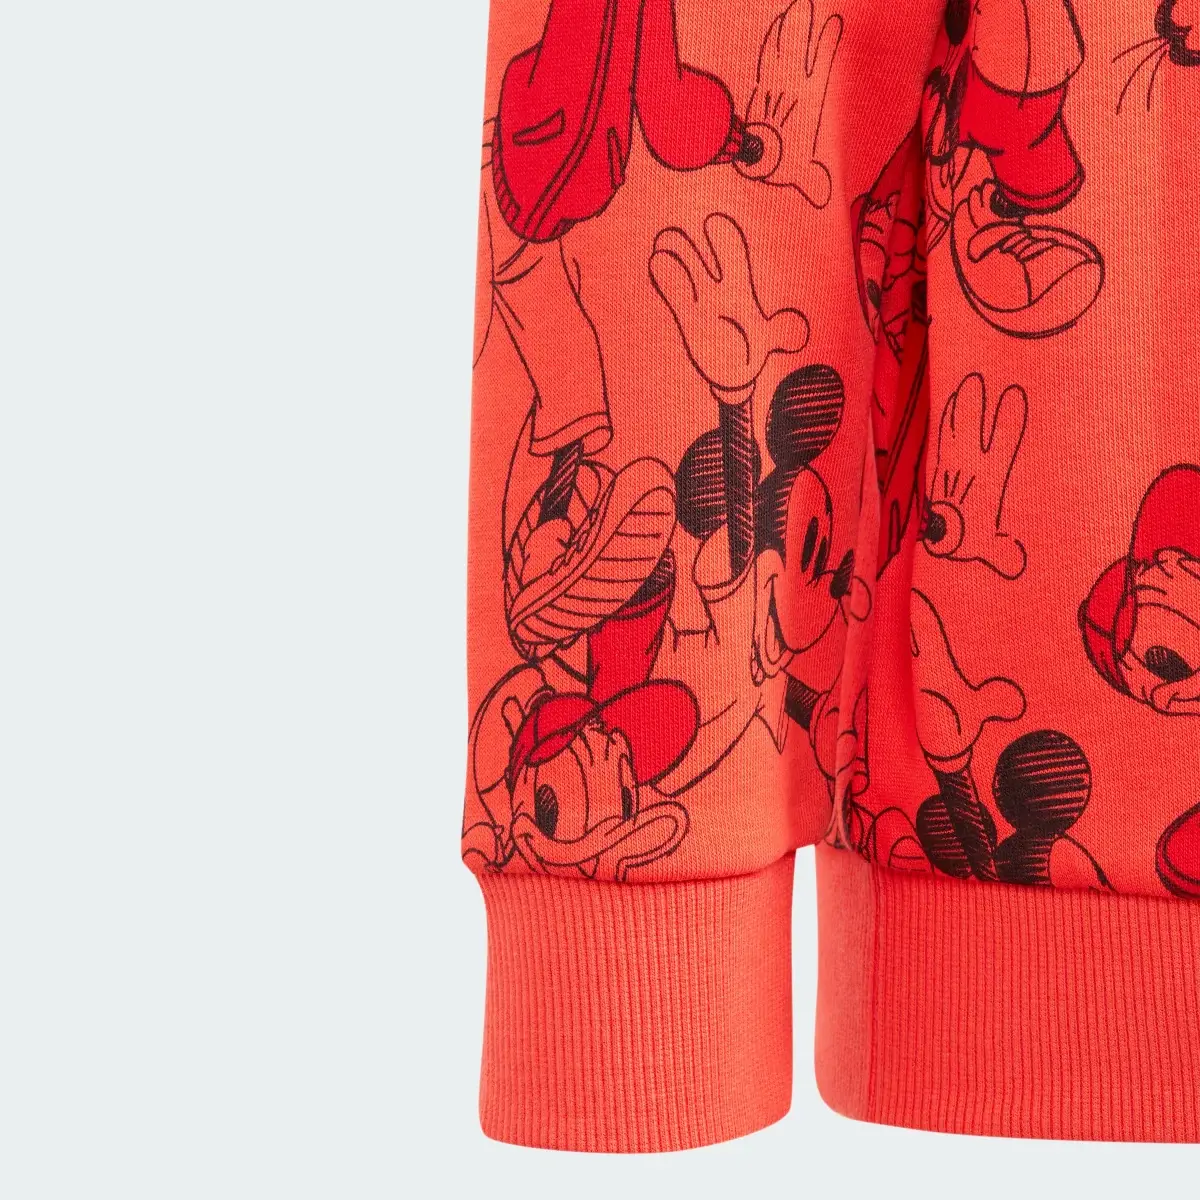 Adidas x Disney Mickey Mouse Sweatshirt. 3